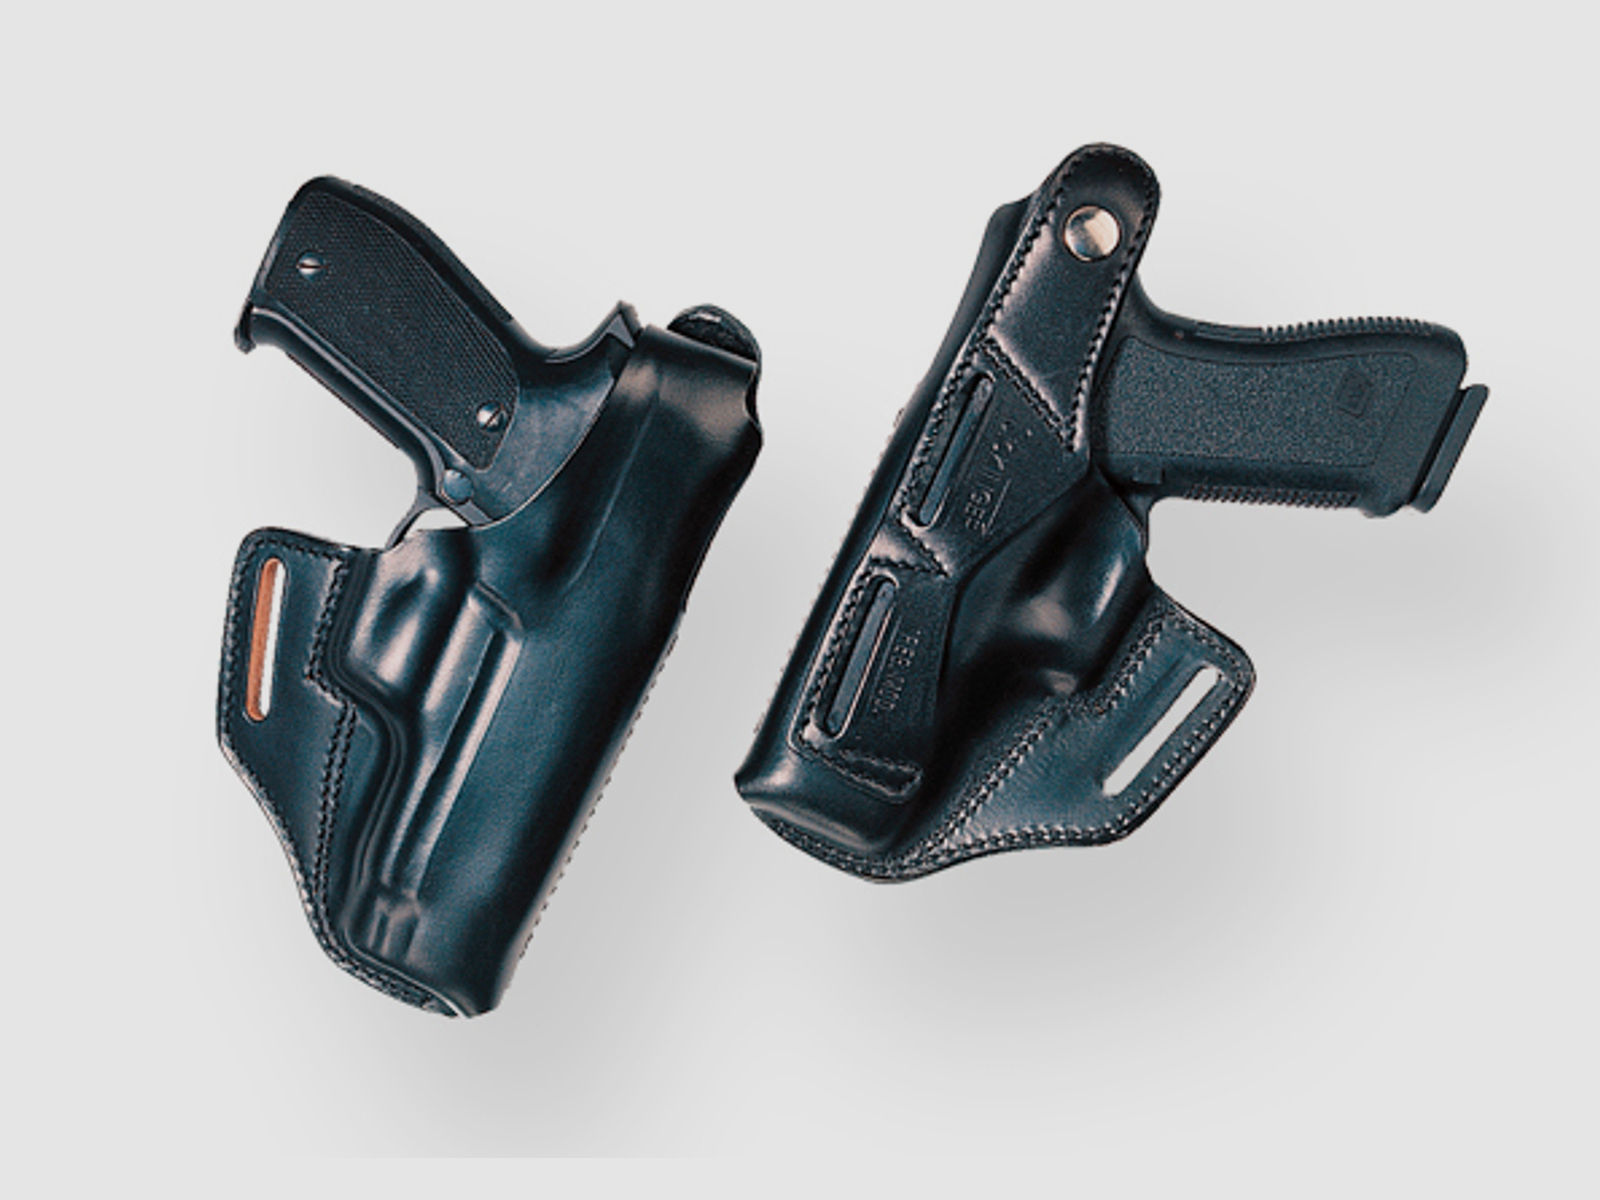 SICKINGER Holster (Leder) f. Glock 29/30 62753 -Belt Master schwarz